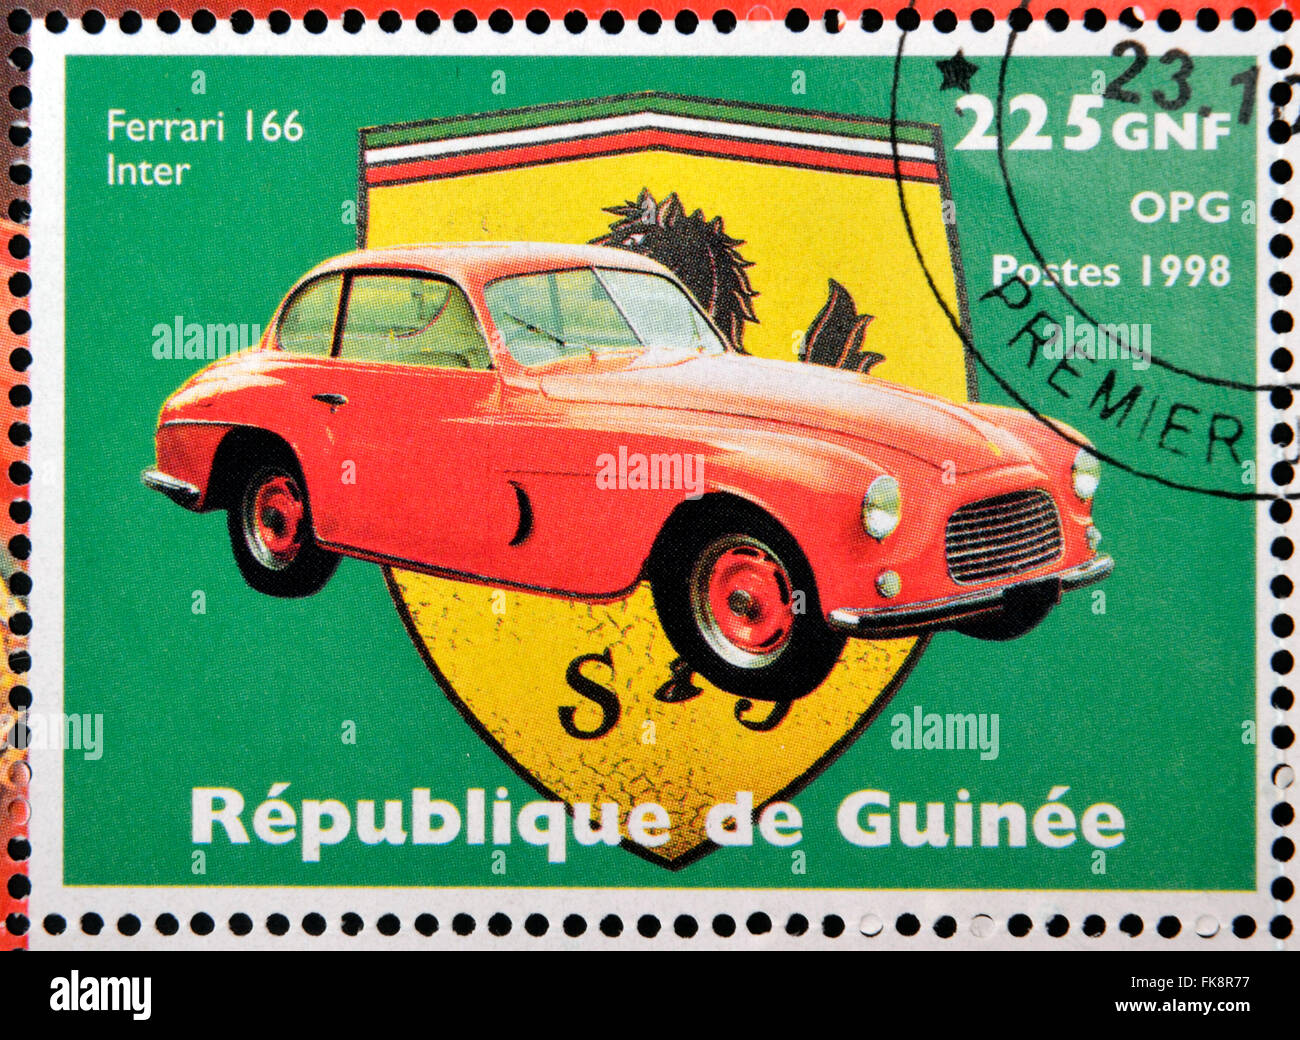 GUINEA - CIRCA 1998: Stamp printed in Guinea dedicated to anniversary of Enzo Ferrari, shows Ferrari 166 Inter, circa 1998 Stock Photo